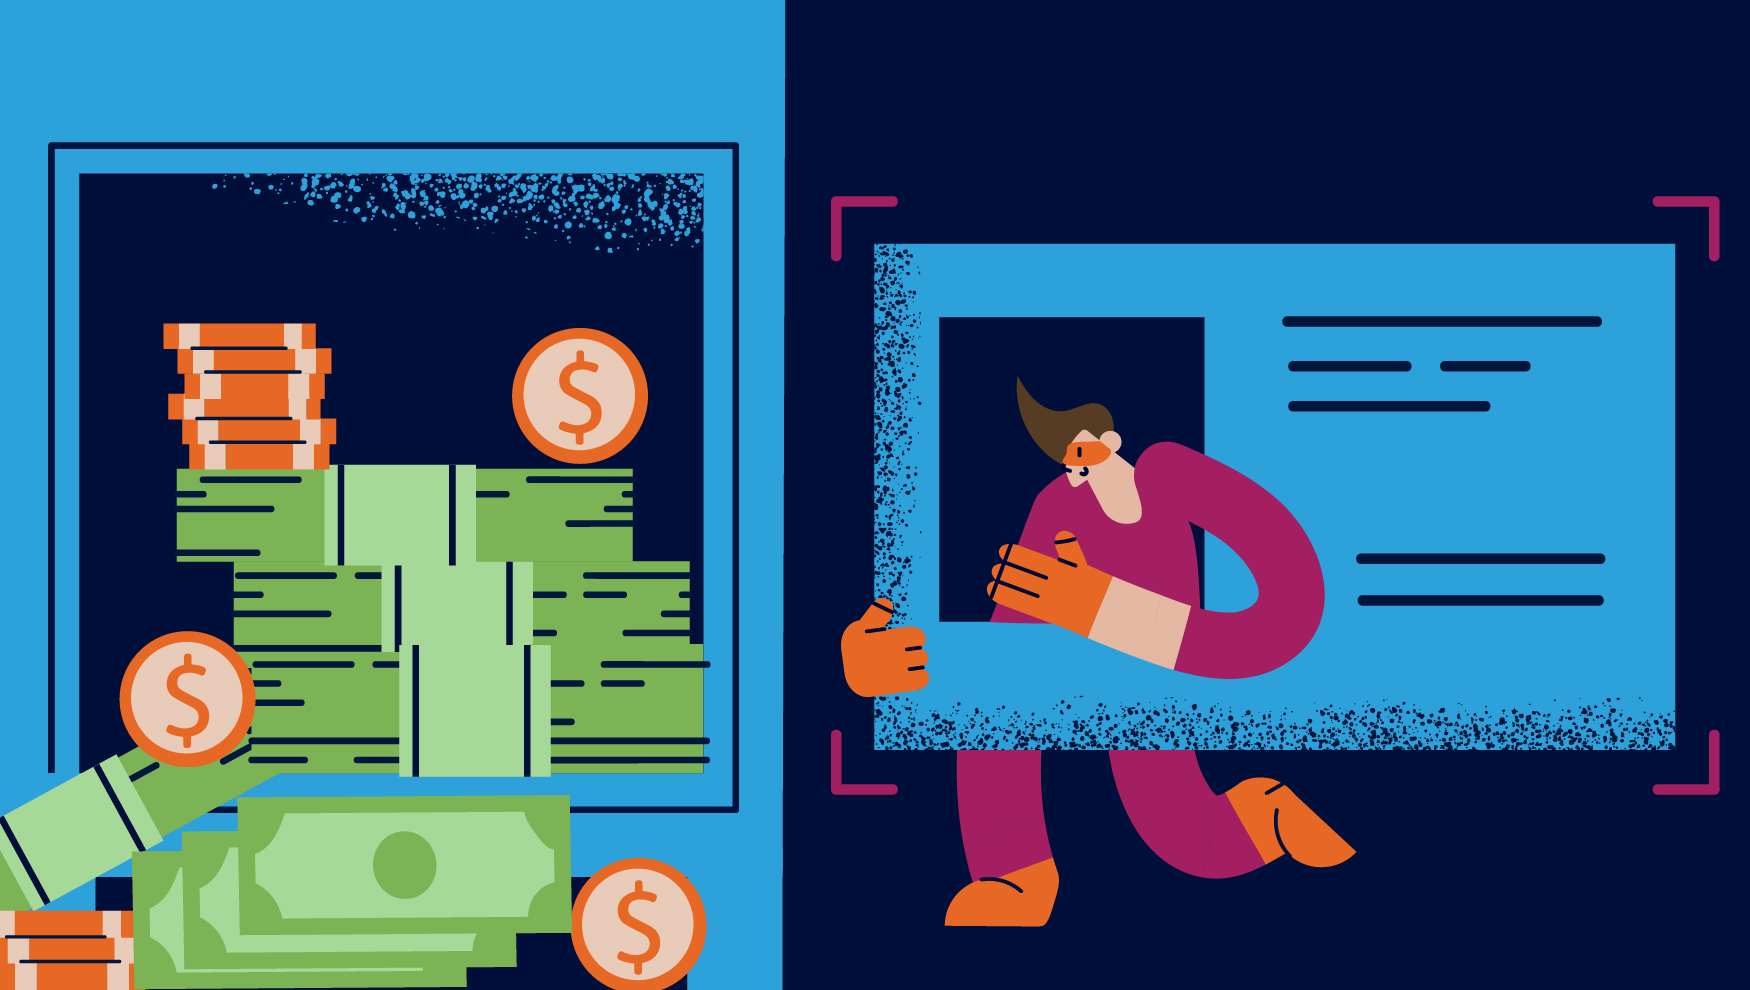 Illustration of fraudster stealing money using social engineering fraud